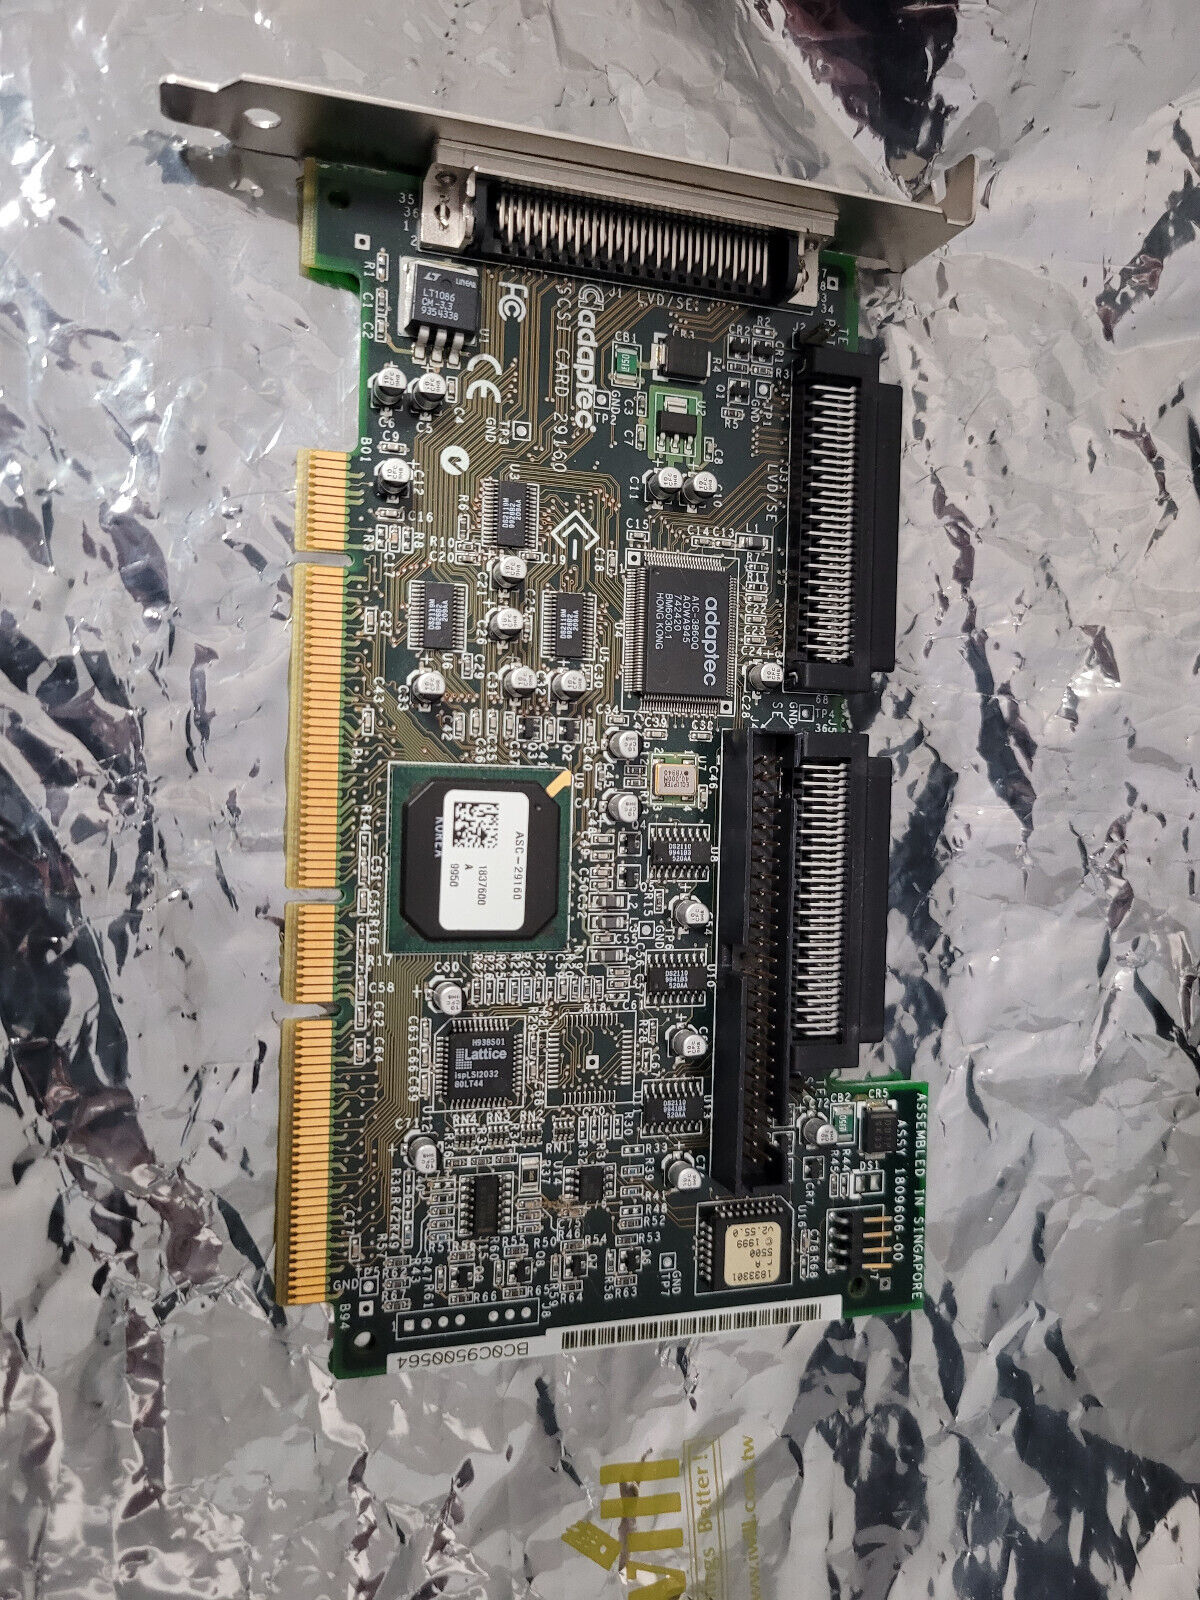 ADAPTEC ASC-29160 ULTRA-160 SCSI ADAPTER HBA 64/32 BIT PCI CONTROLLER CARD